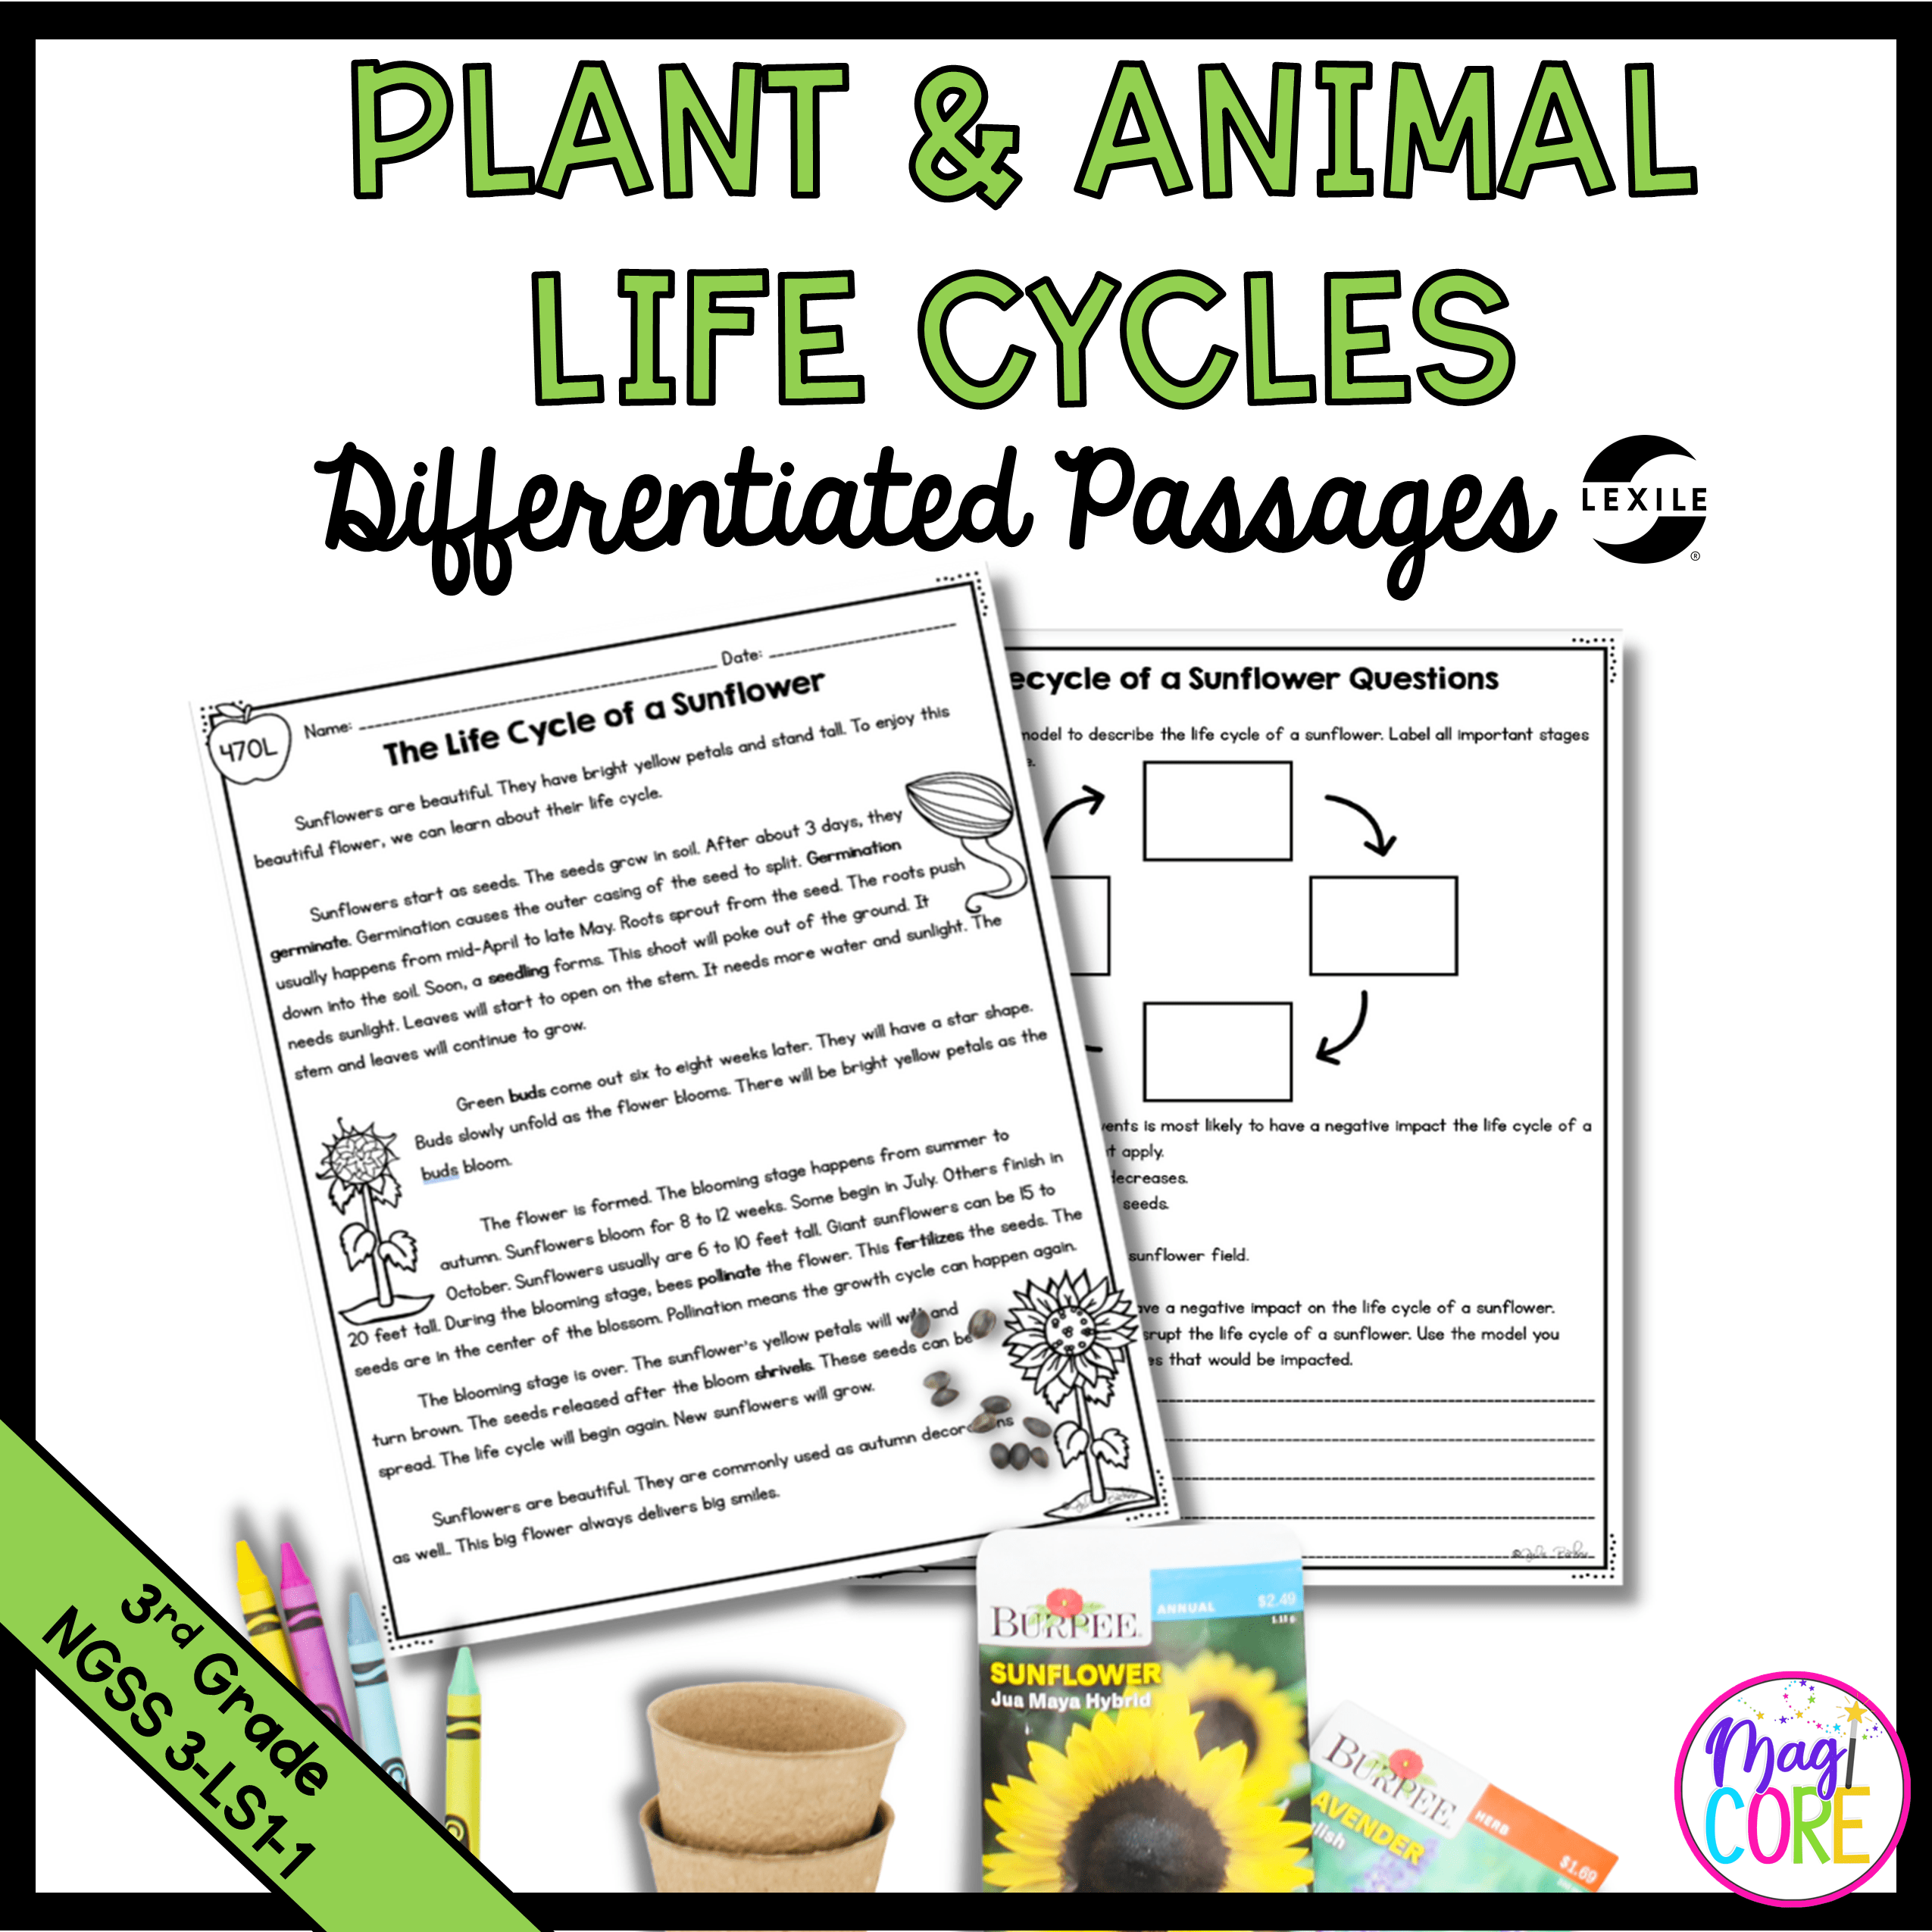 Plant & Animal Life Cycles - 3-LS1-1 | MagiCore